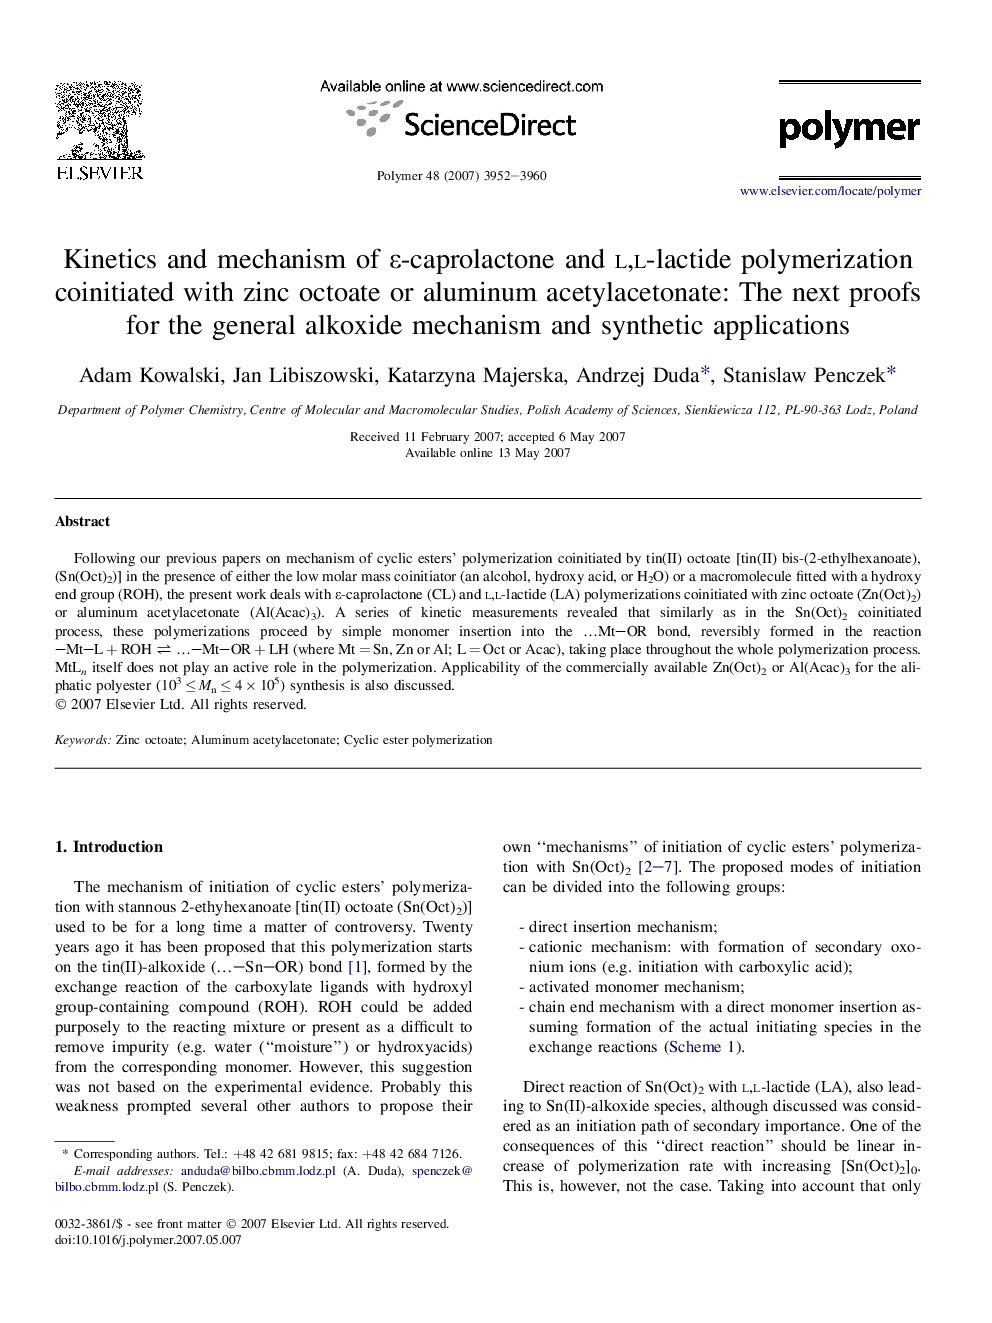 Kinetics and mechanism of É-caprolactone and l,l-lactide polymerization coinitiated with zinc octoate or aluminum acetylacetonate: The next proofs for the general alkoxide mechanism and synthetic applications